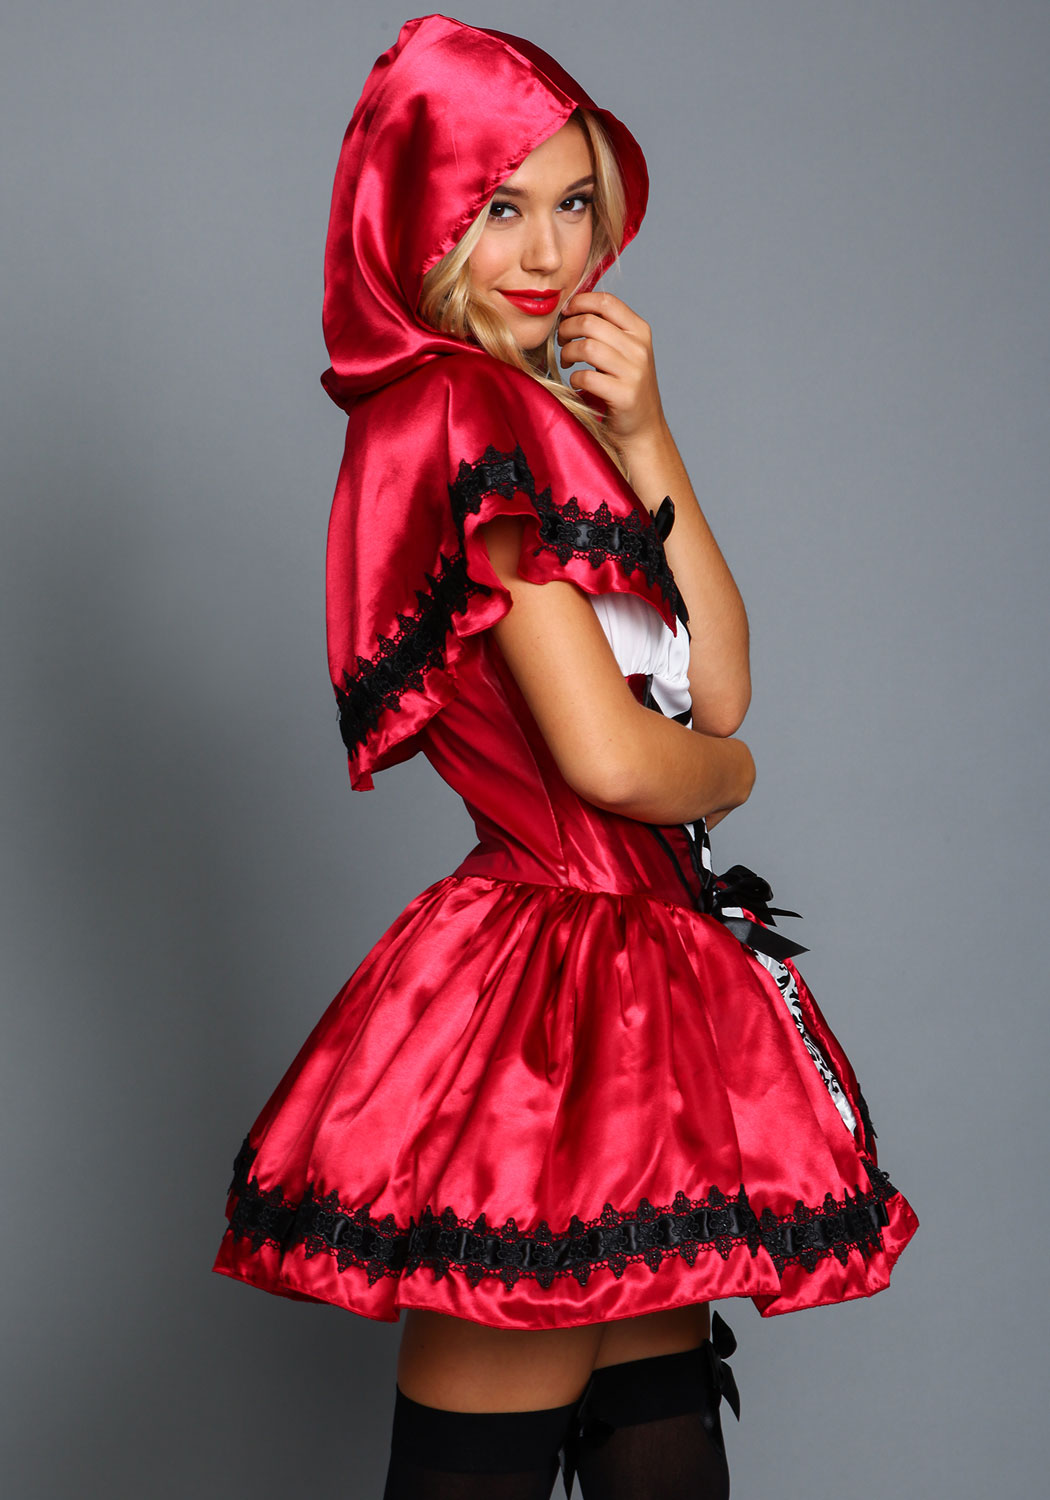 Alexis Ren Love Culture Halloween Costume Shoot 2014 02 Gotceleb